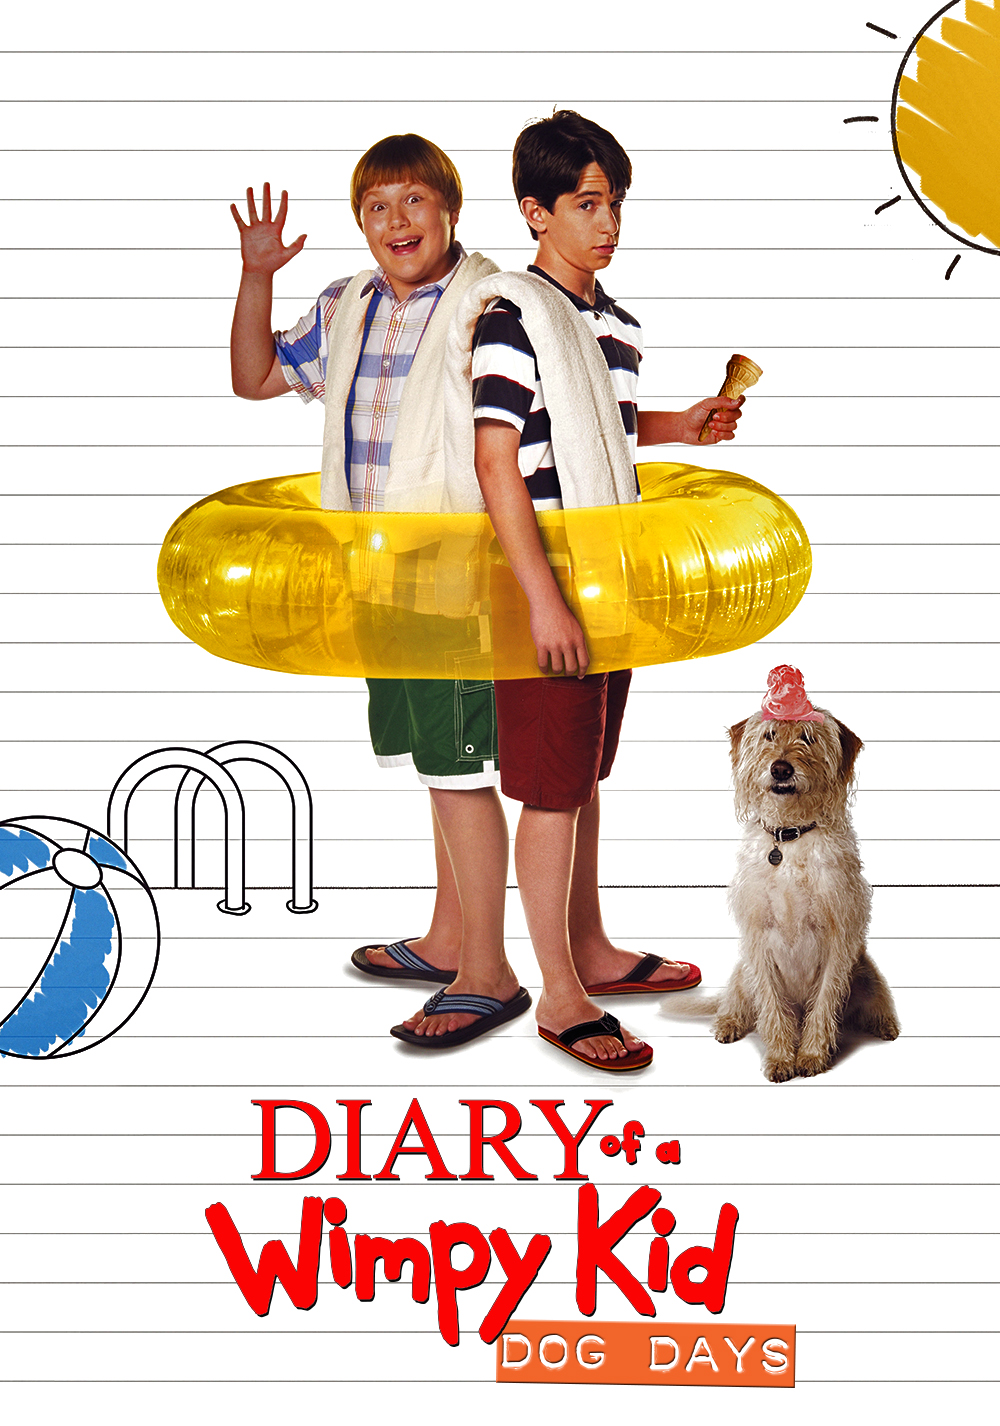 Diary of a Wimpy Kid: Dog Days  Moviepedia  Fandom